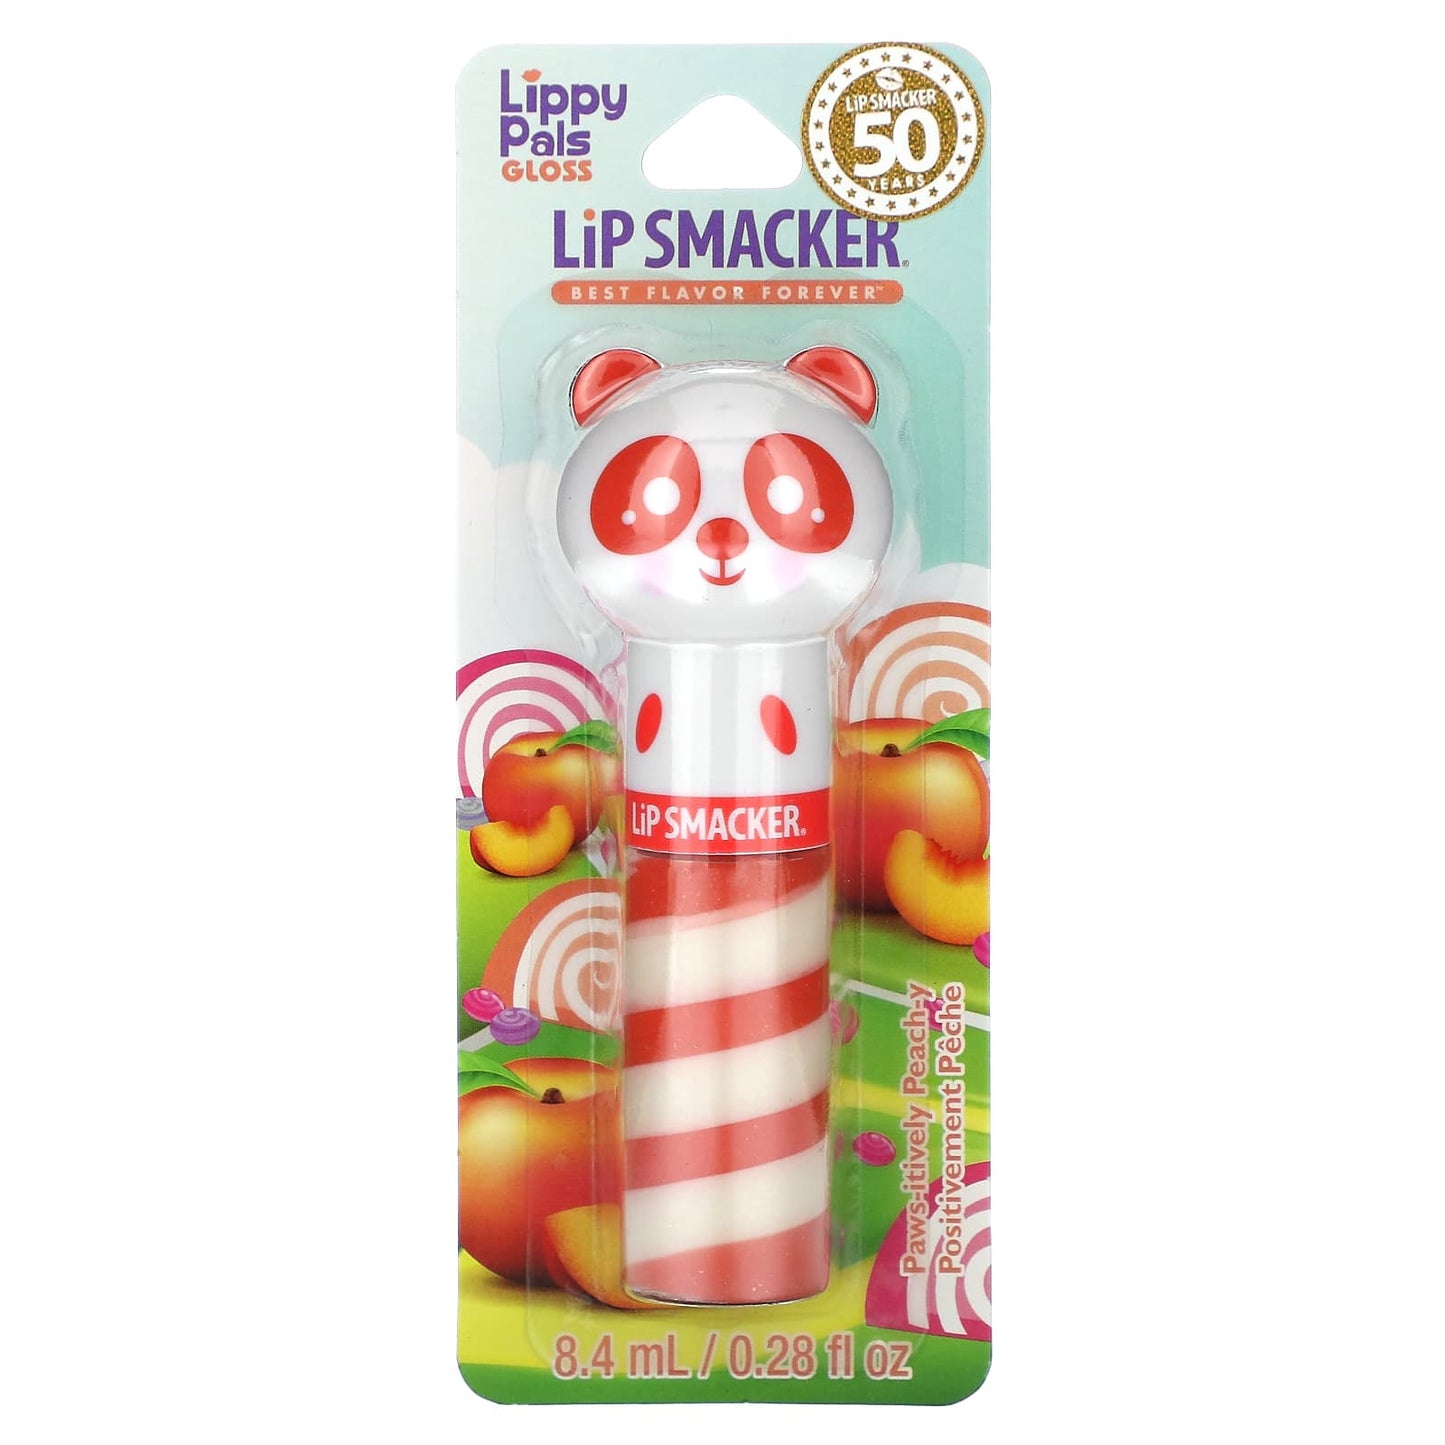 Lip Smacker, Lippy Pals Gloss, Paws-itively Peach-y, 0.28 fl oz  (8.4 ml)